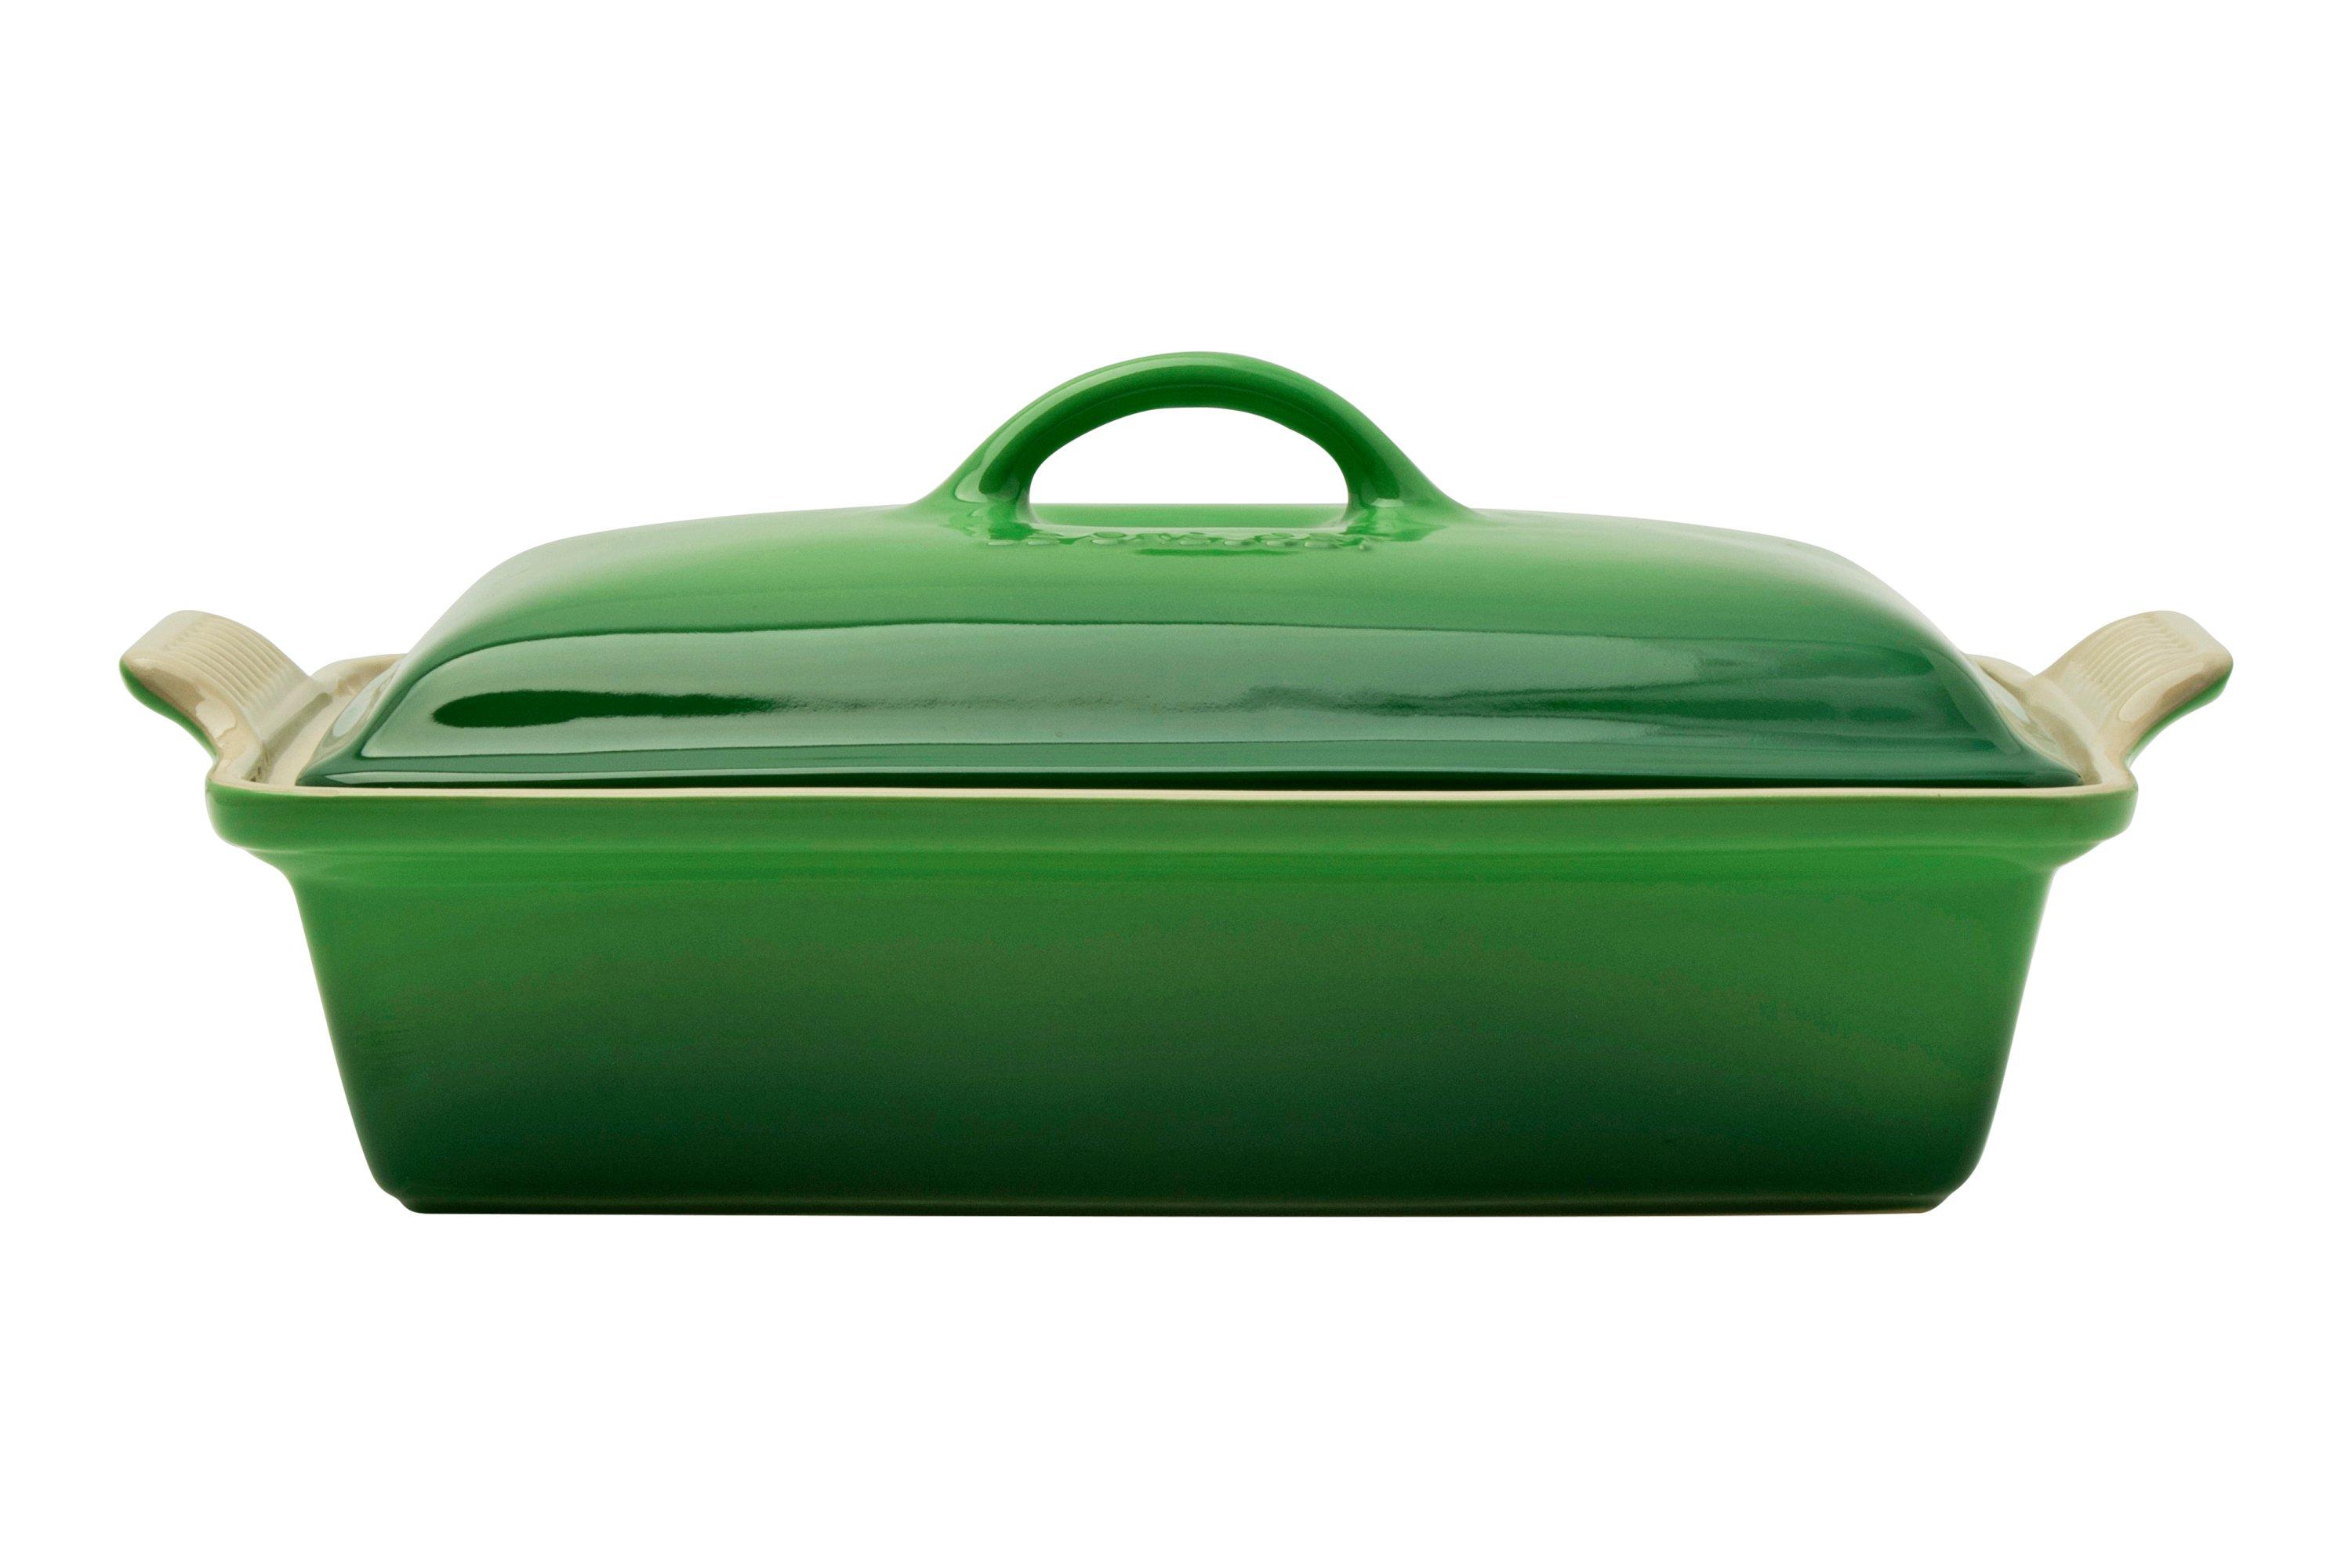 Le Creuset rectangular oven dish, 1.1 L, 19 cm, green